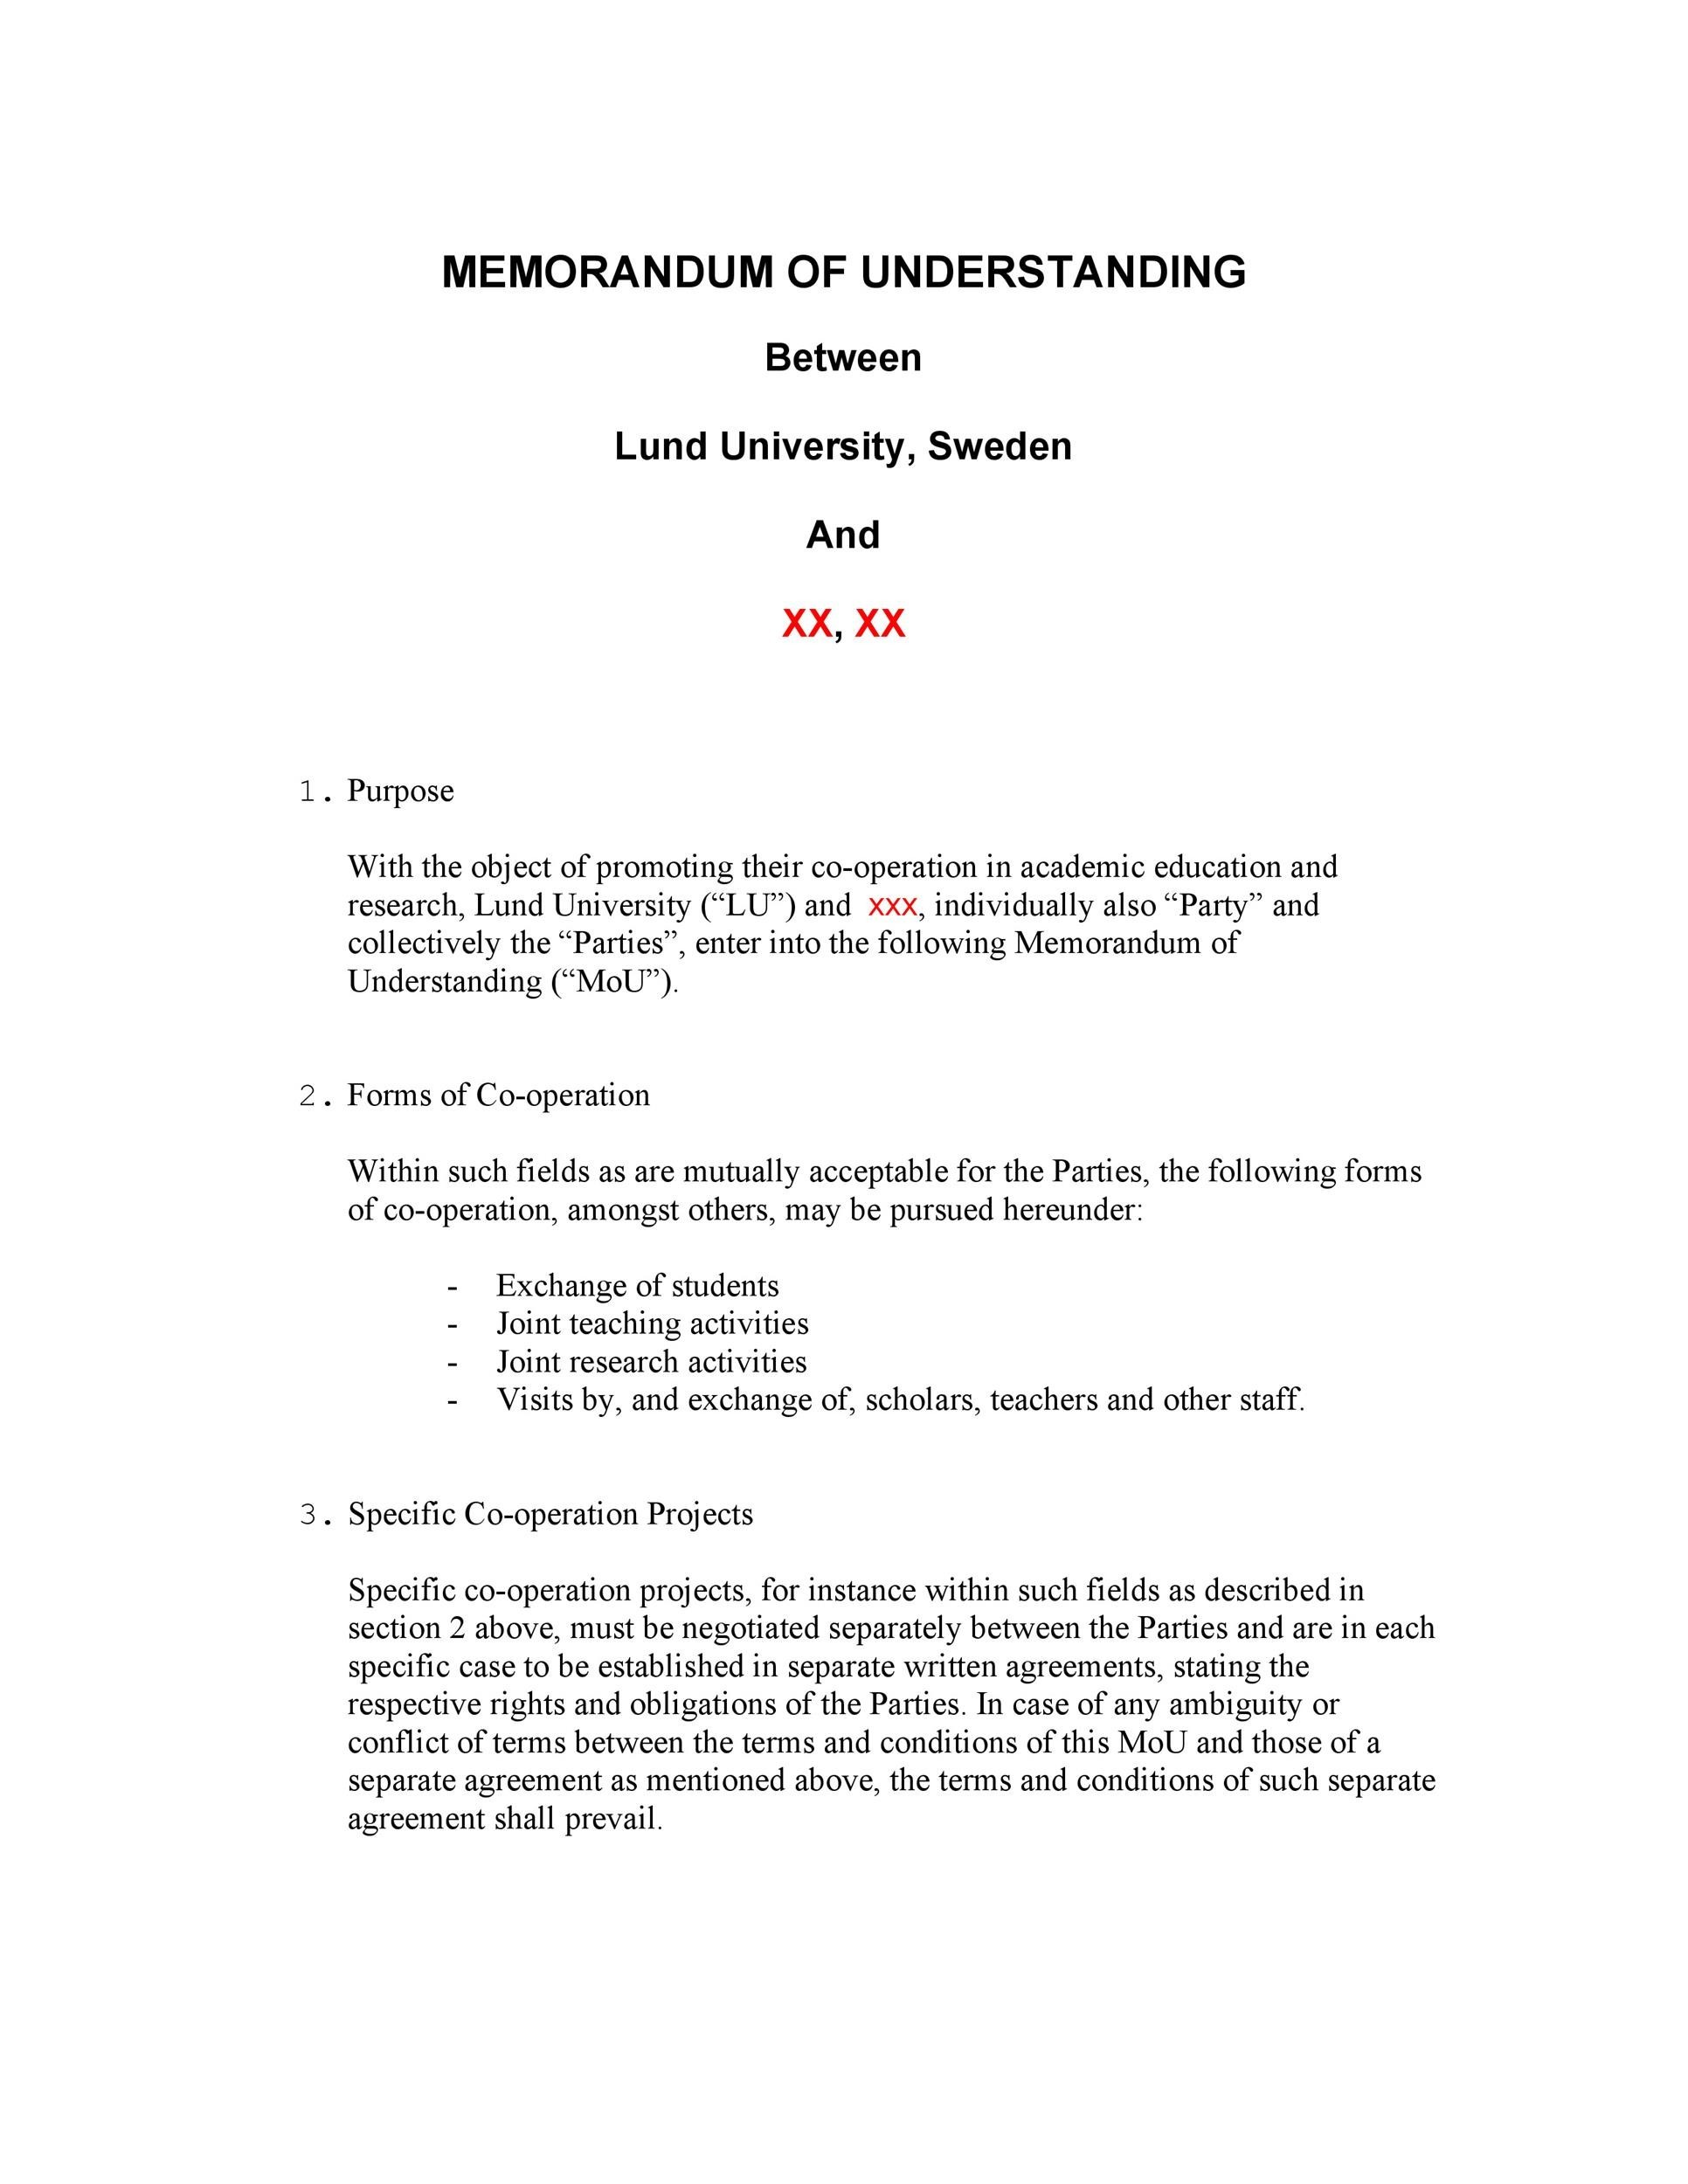 50 Free Memorandum of Understanding Templates [Word] ᐅ ...